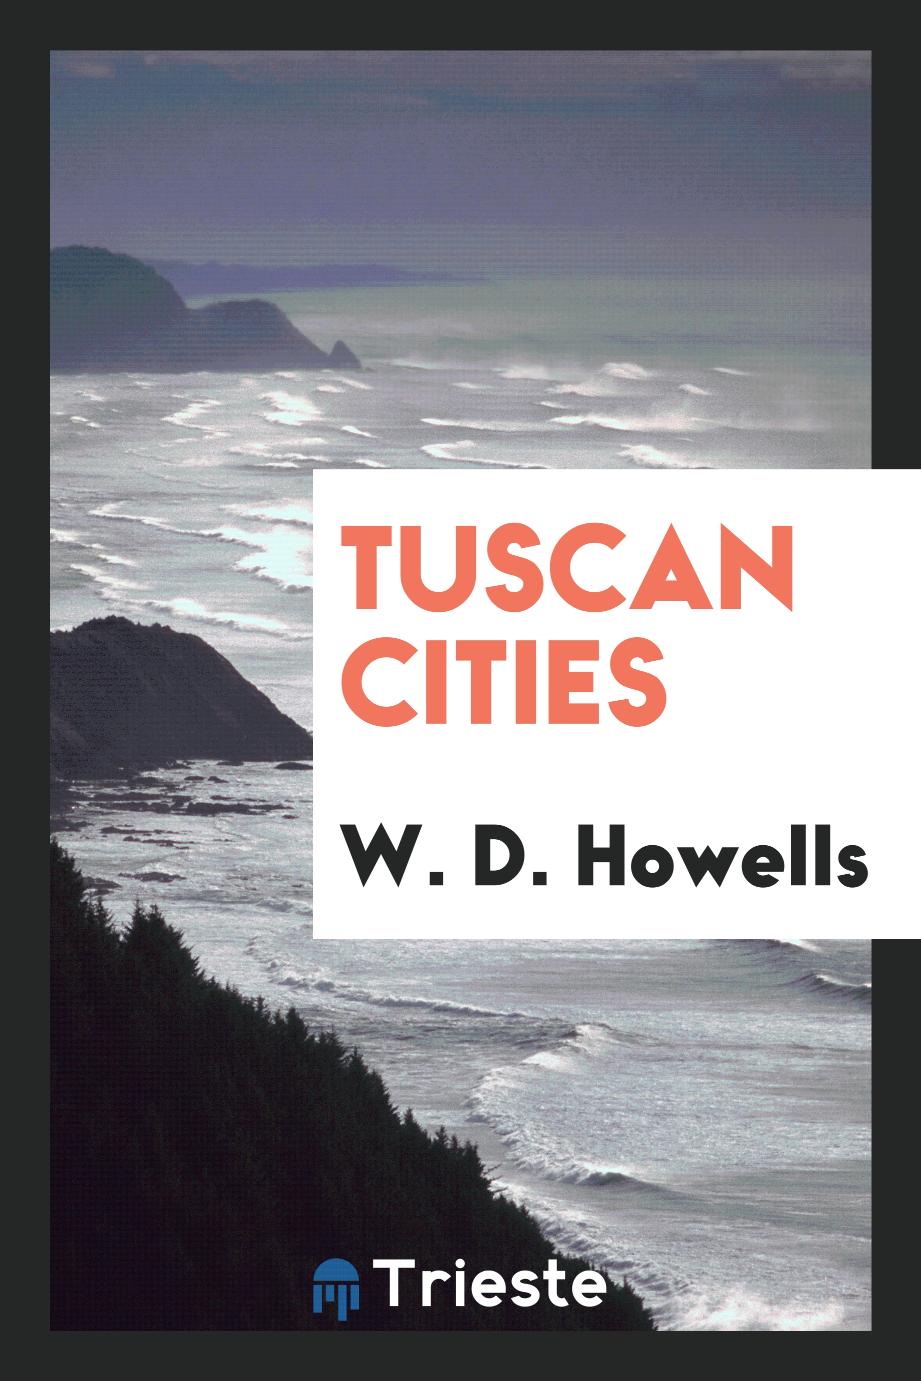 Tuscan cities